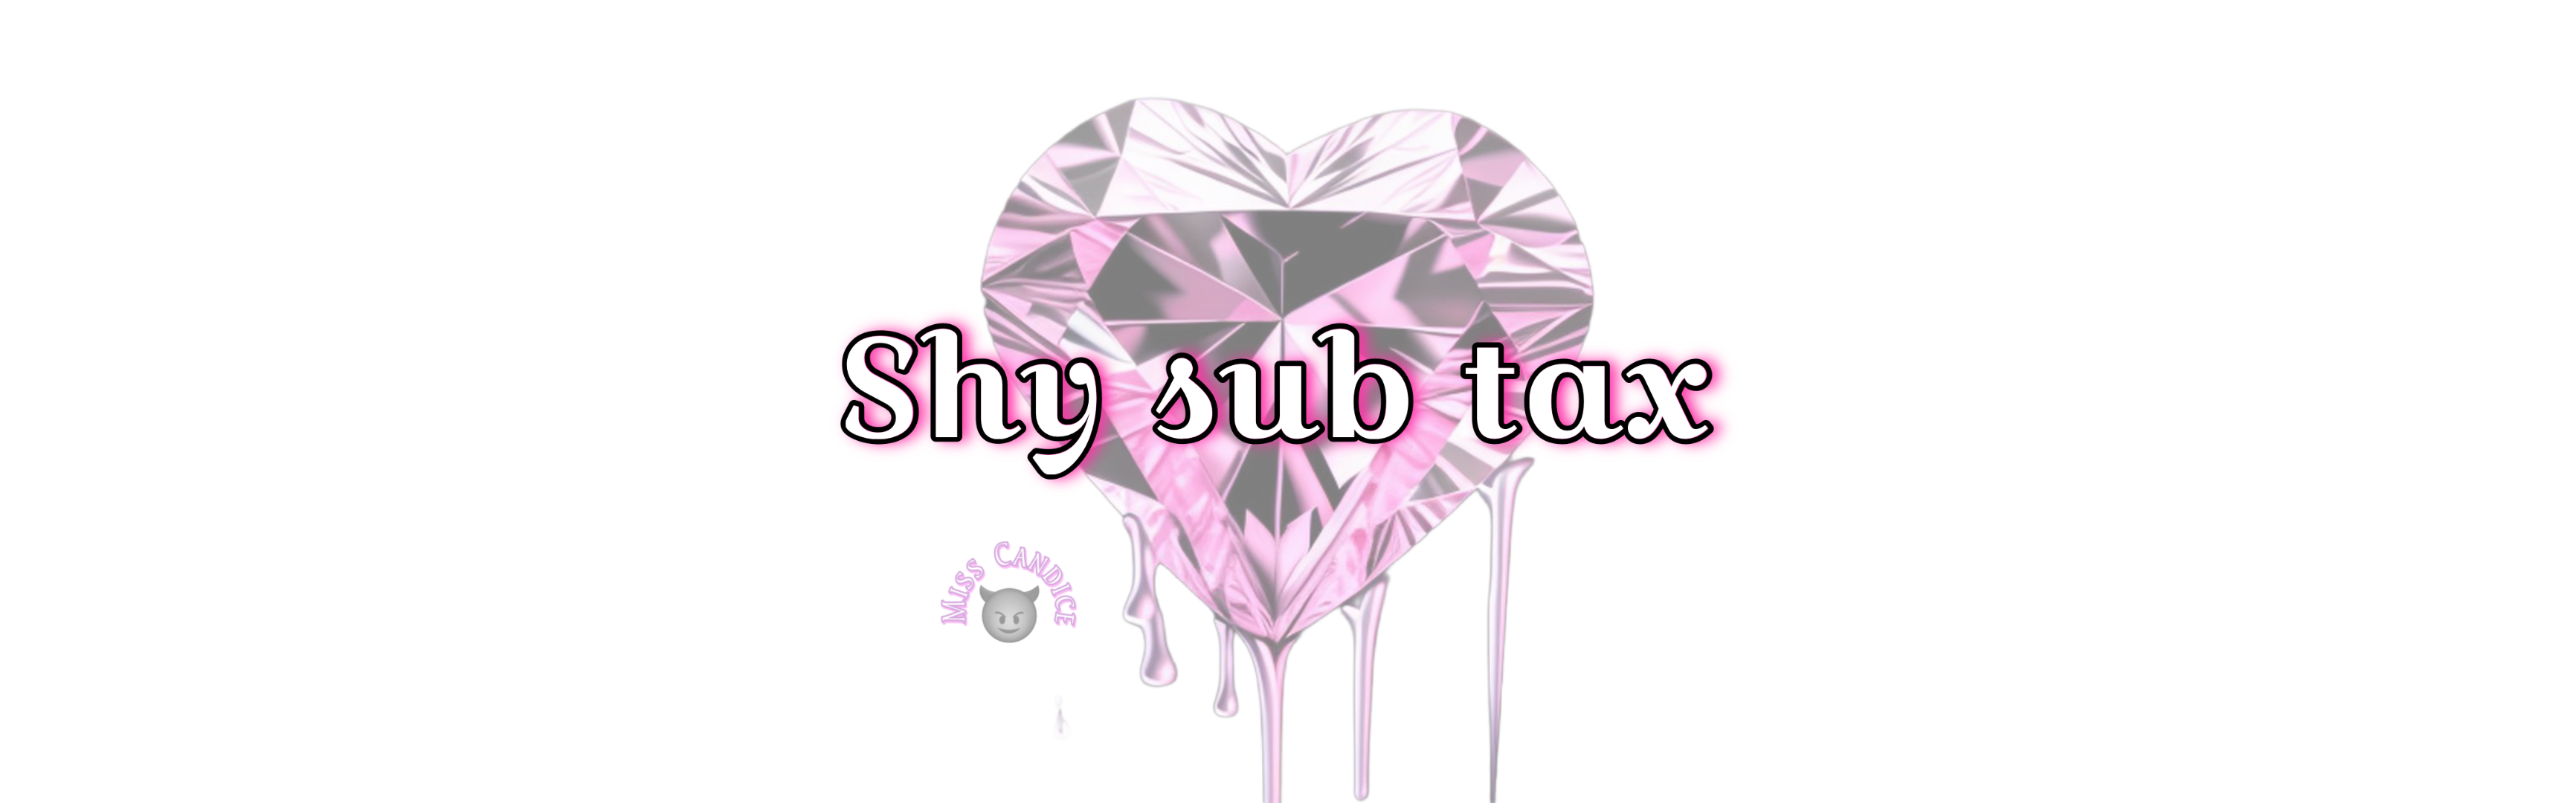 Pay the Shy sub tax